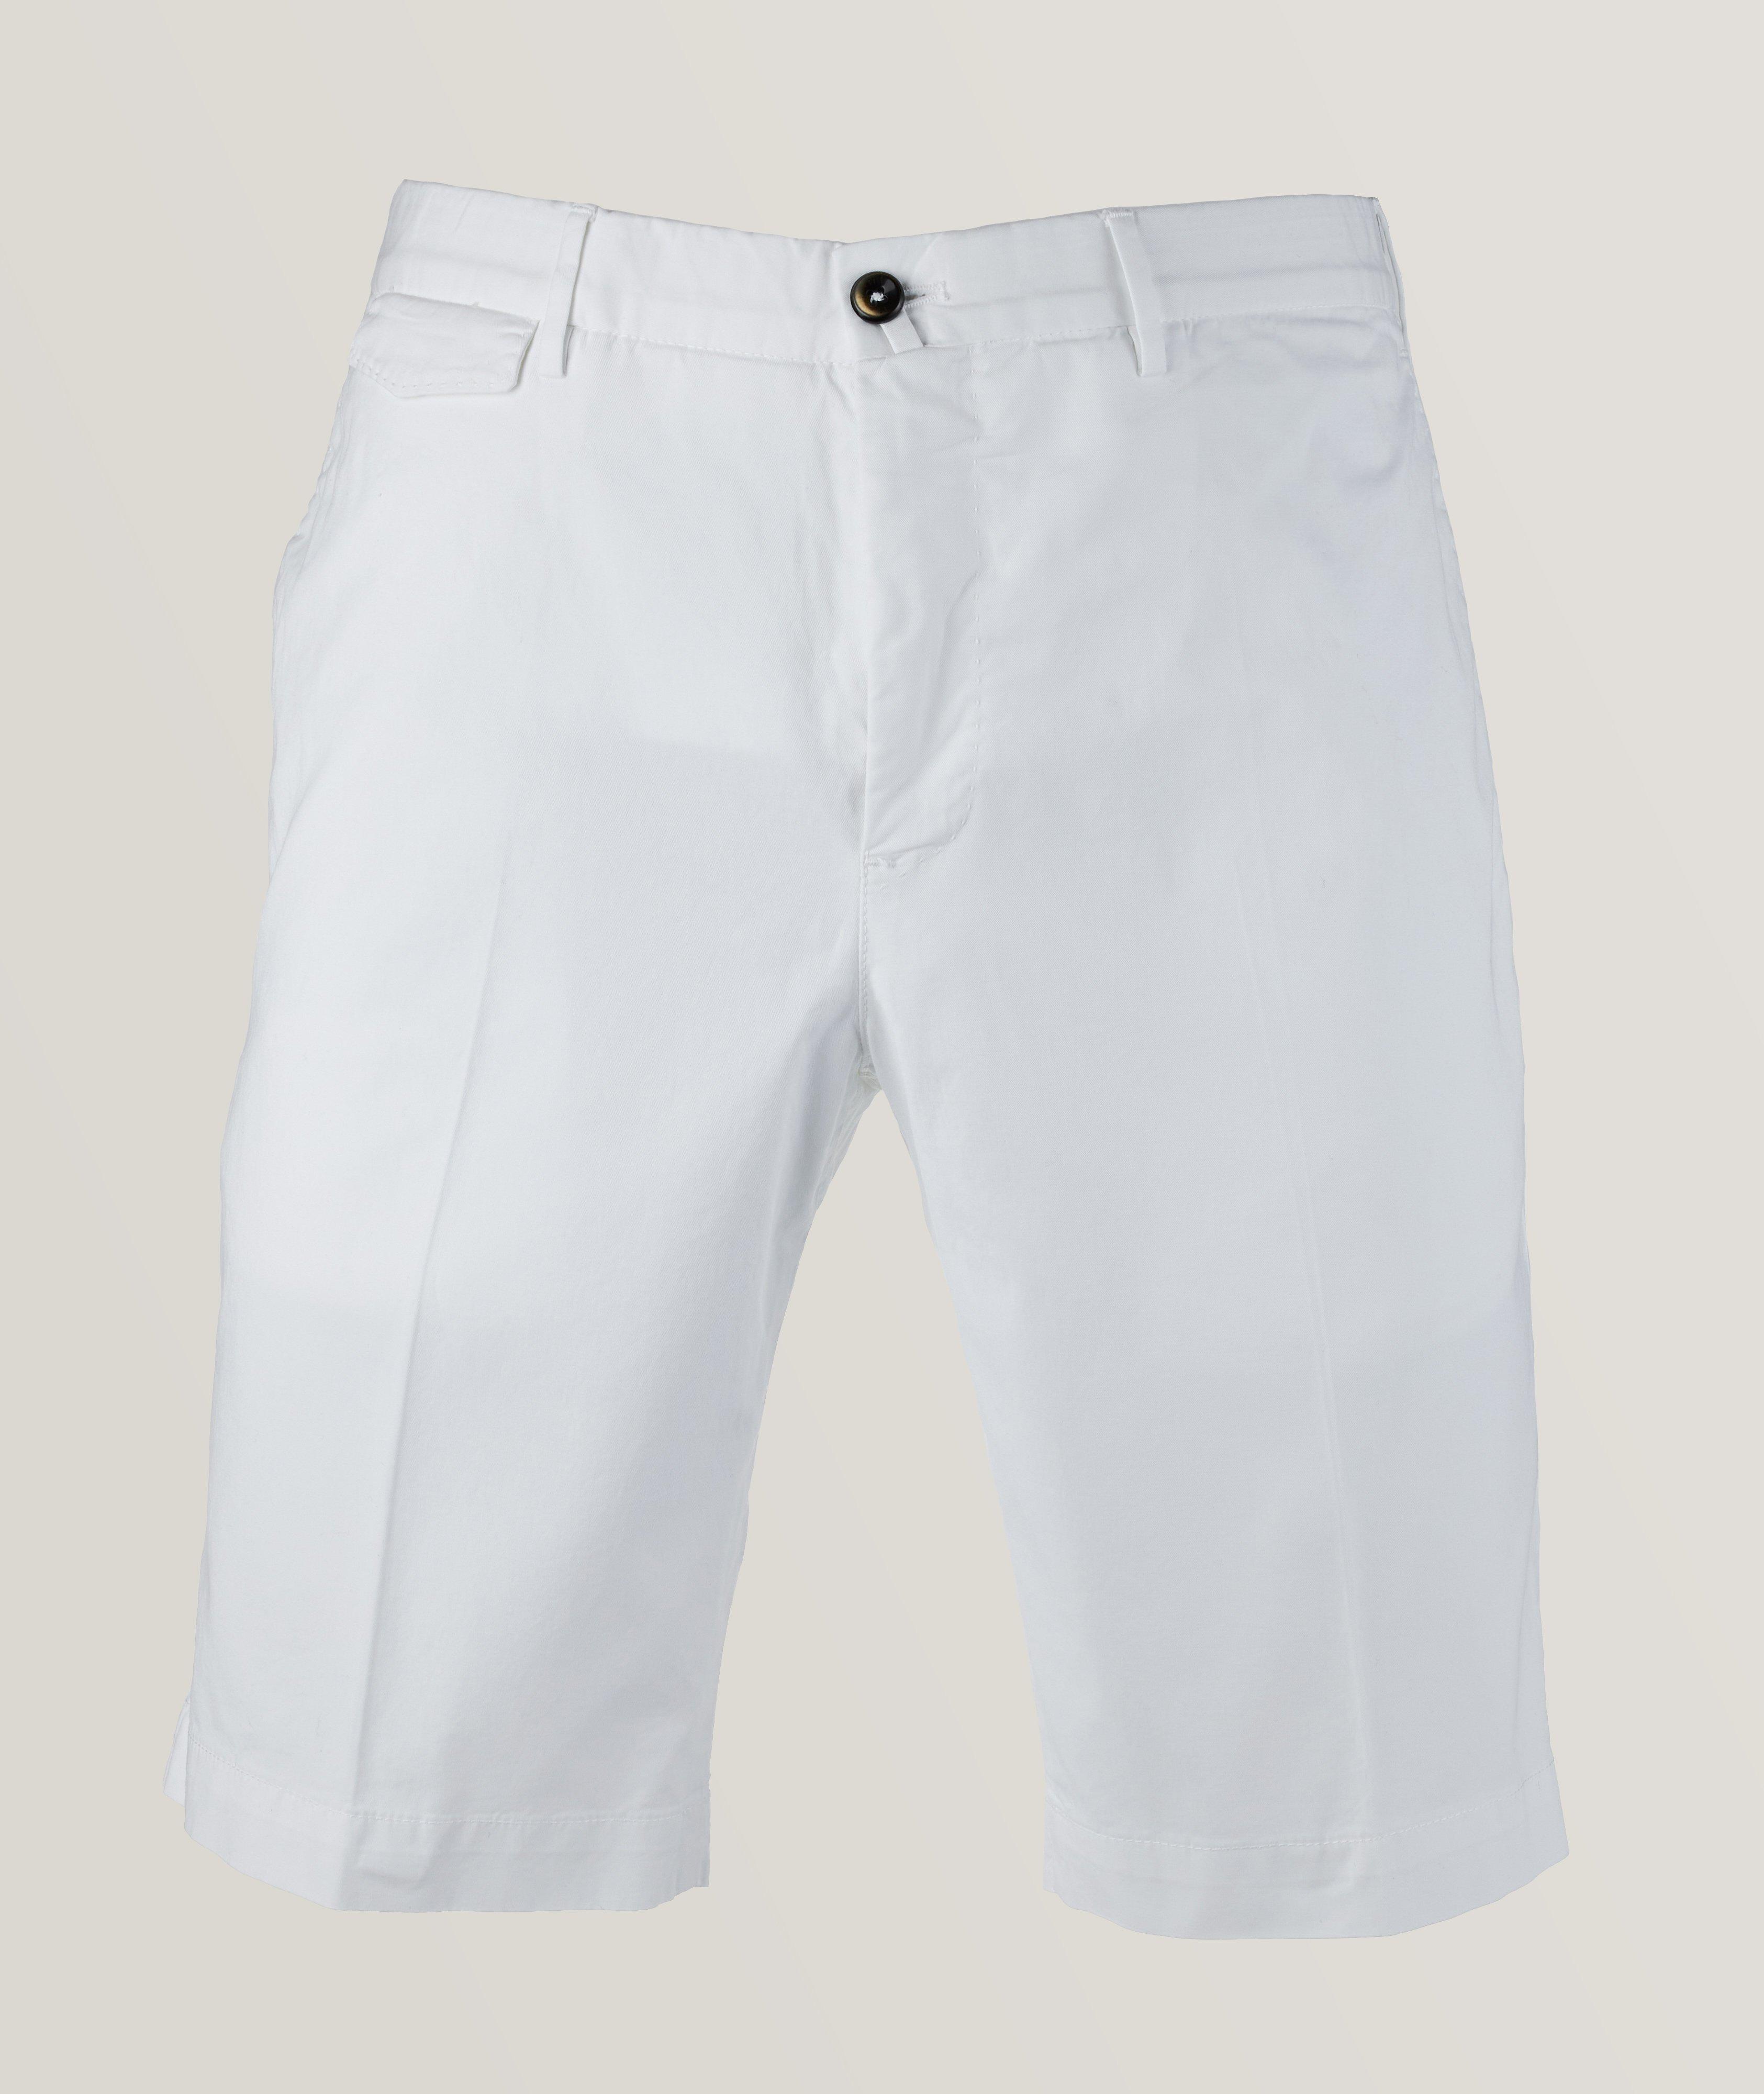 Cotton-Stretch Gab Bermuda Shorts image 0